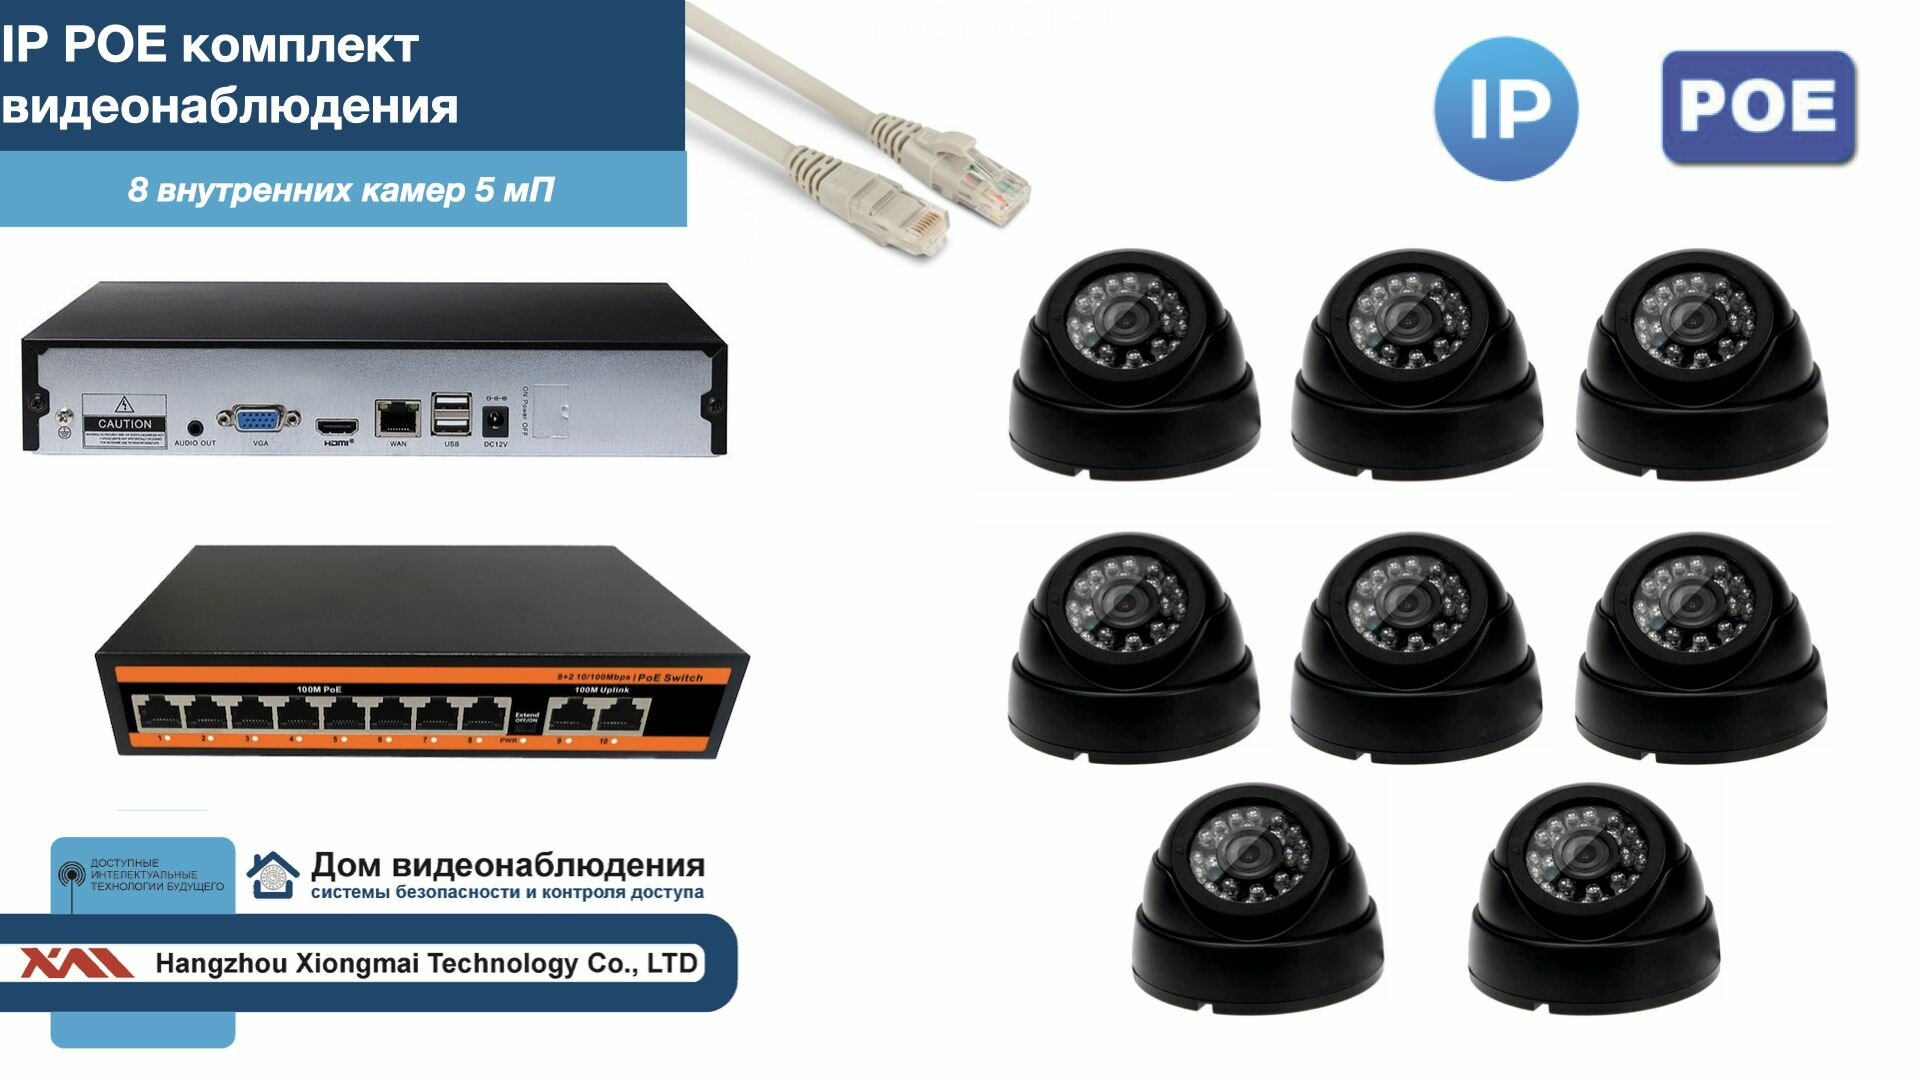 Полный IP POE комплект видеонаблюдения на 8 камер (KIT8IPPOE300B5MP)